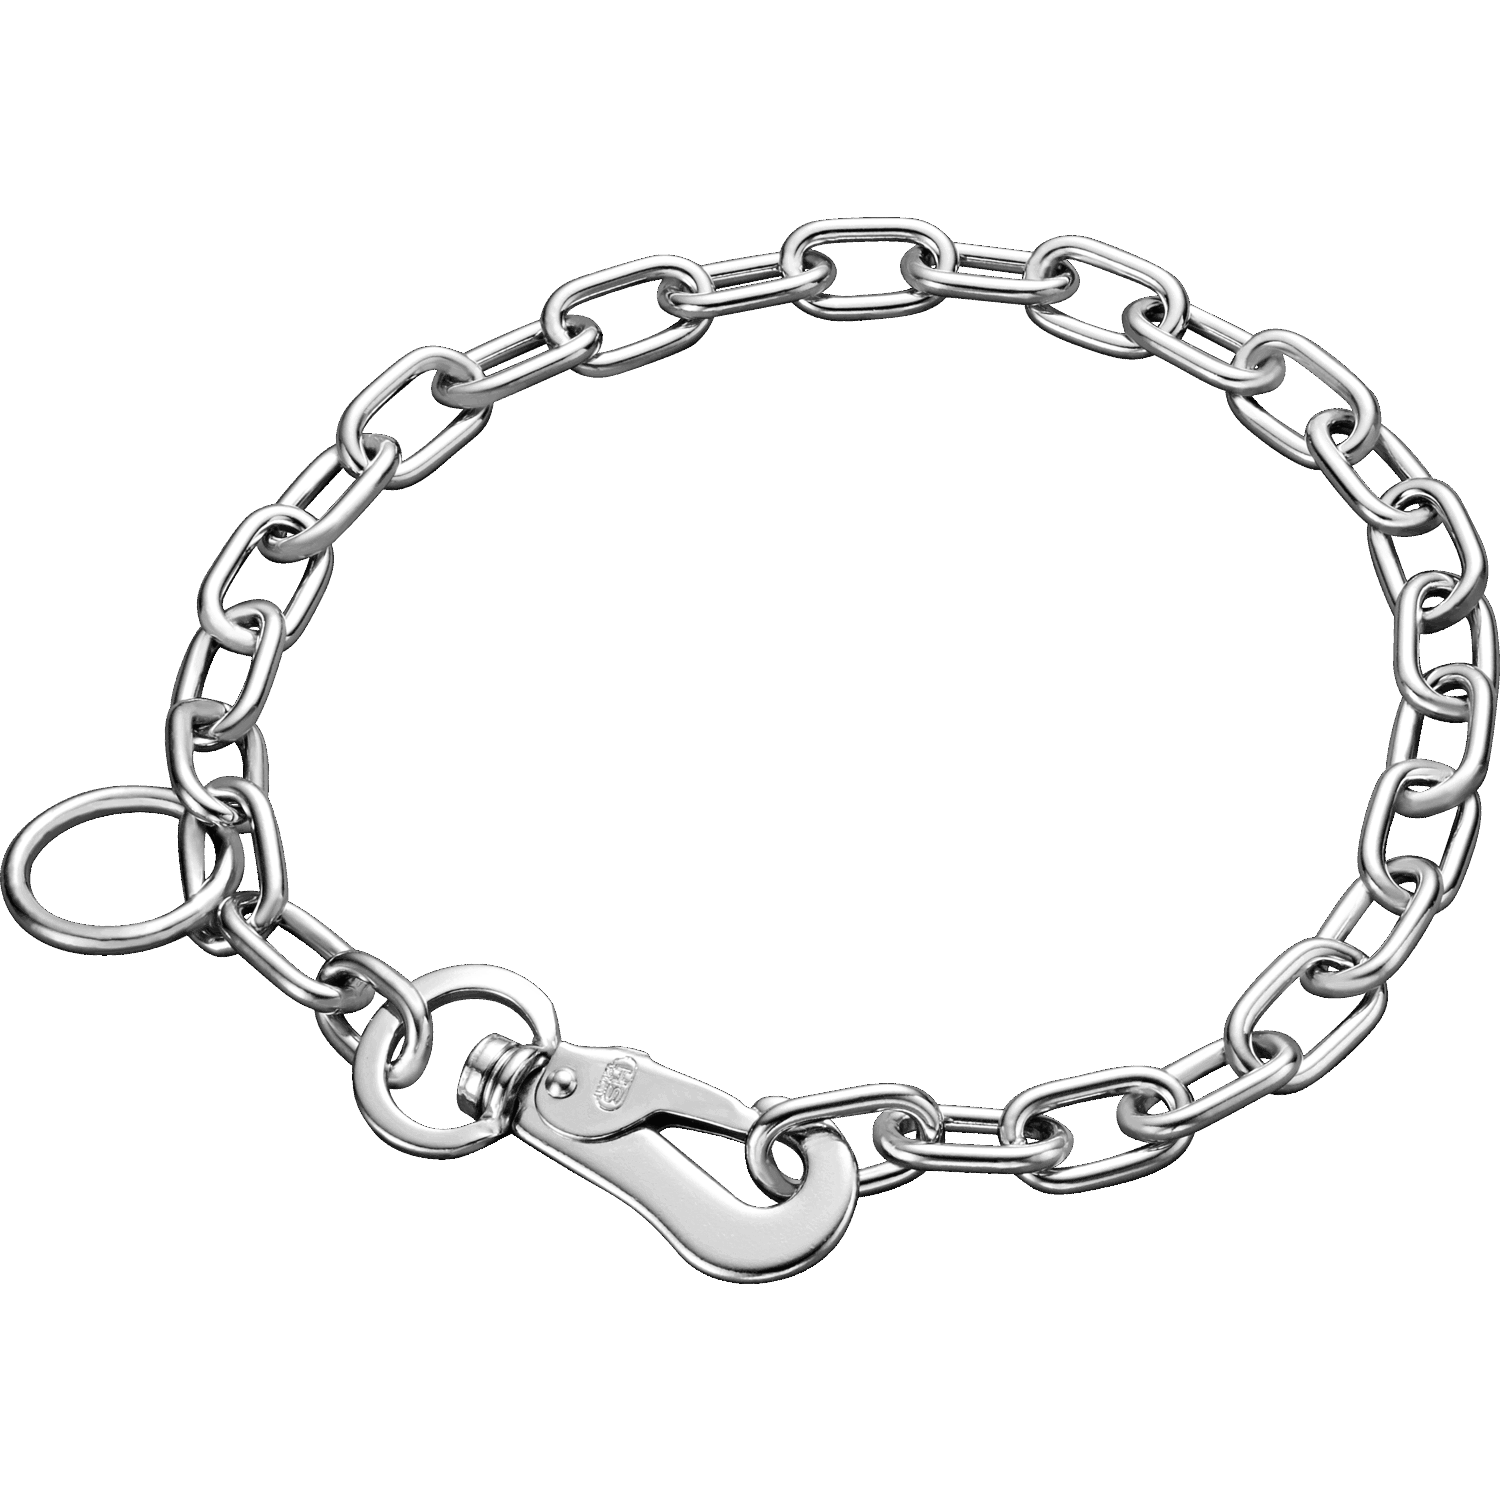 Adjustable Medium Chain Link Collar with SPRENGER Hook (Steel Chrome-Plated) - 3mm